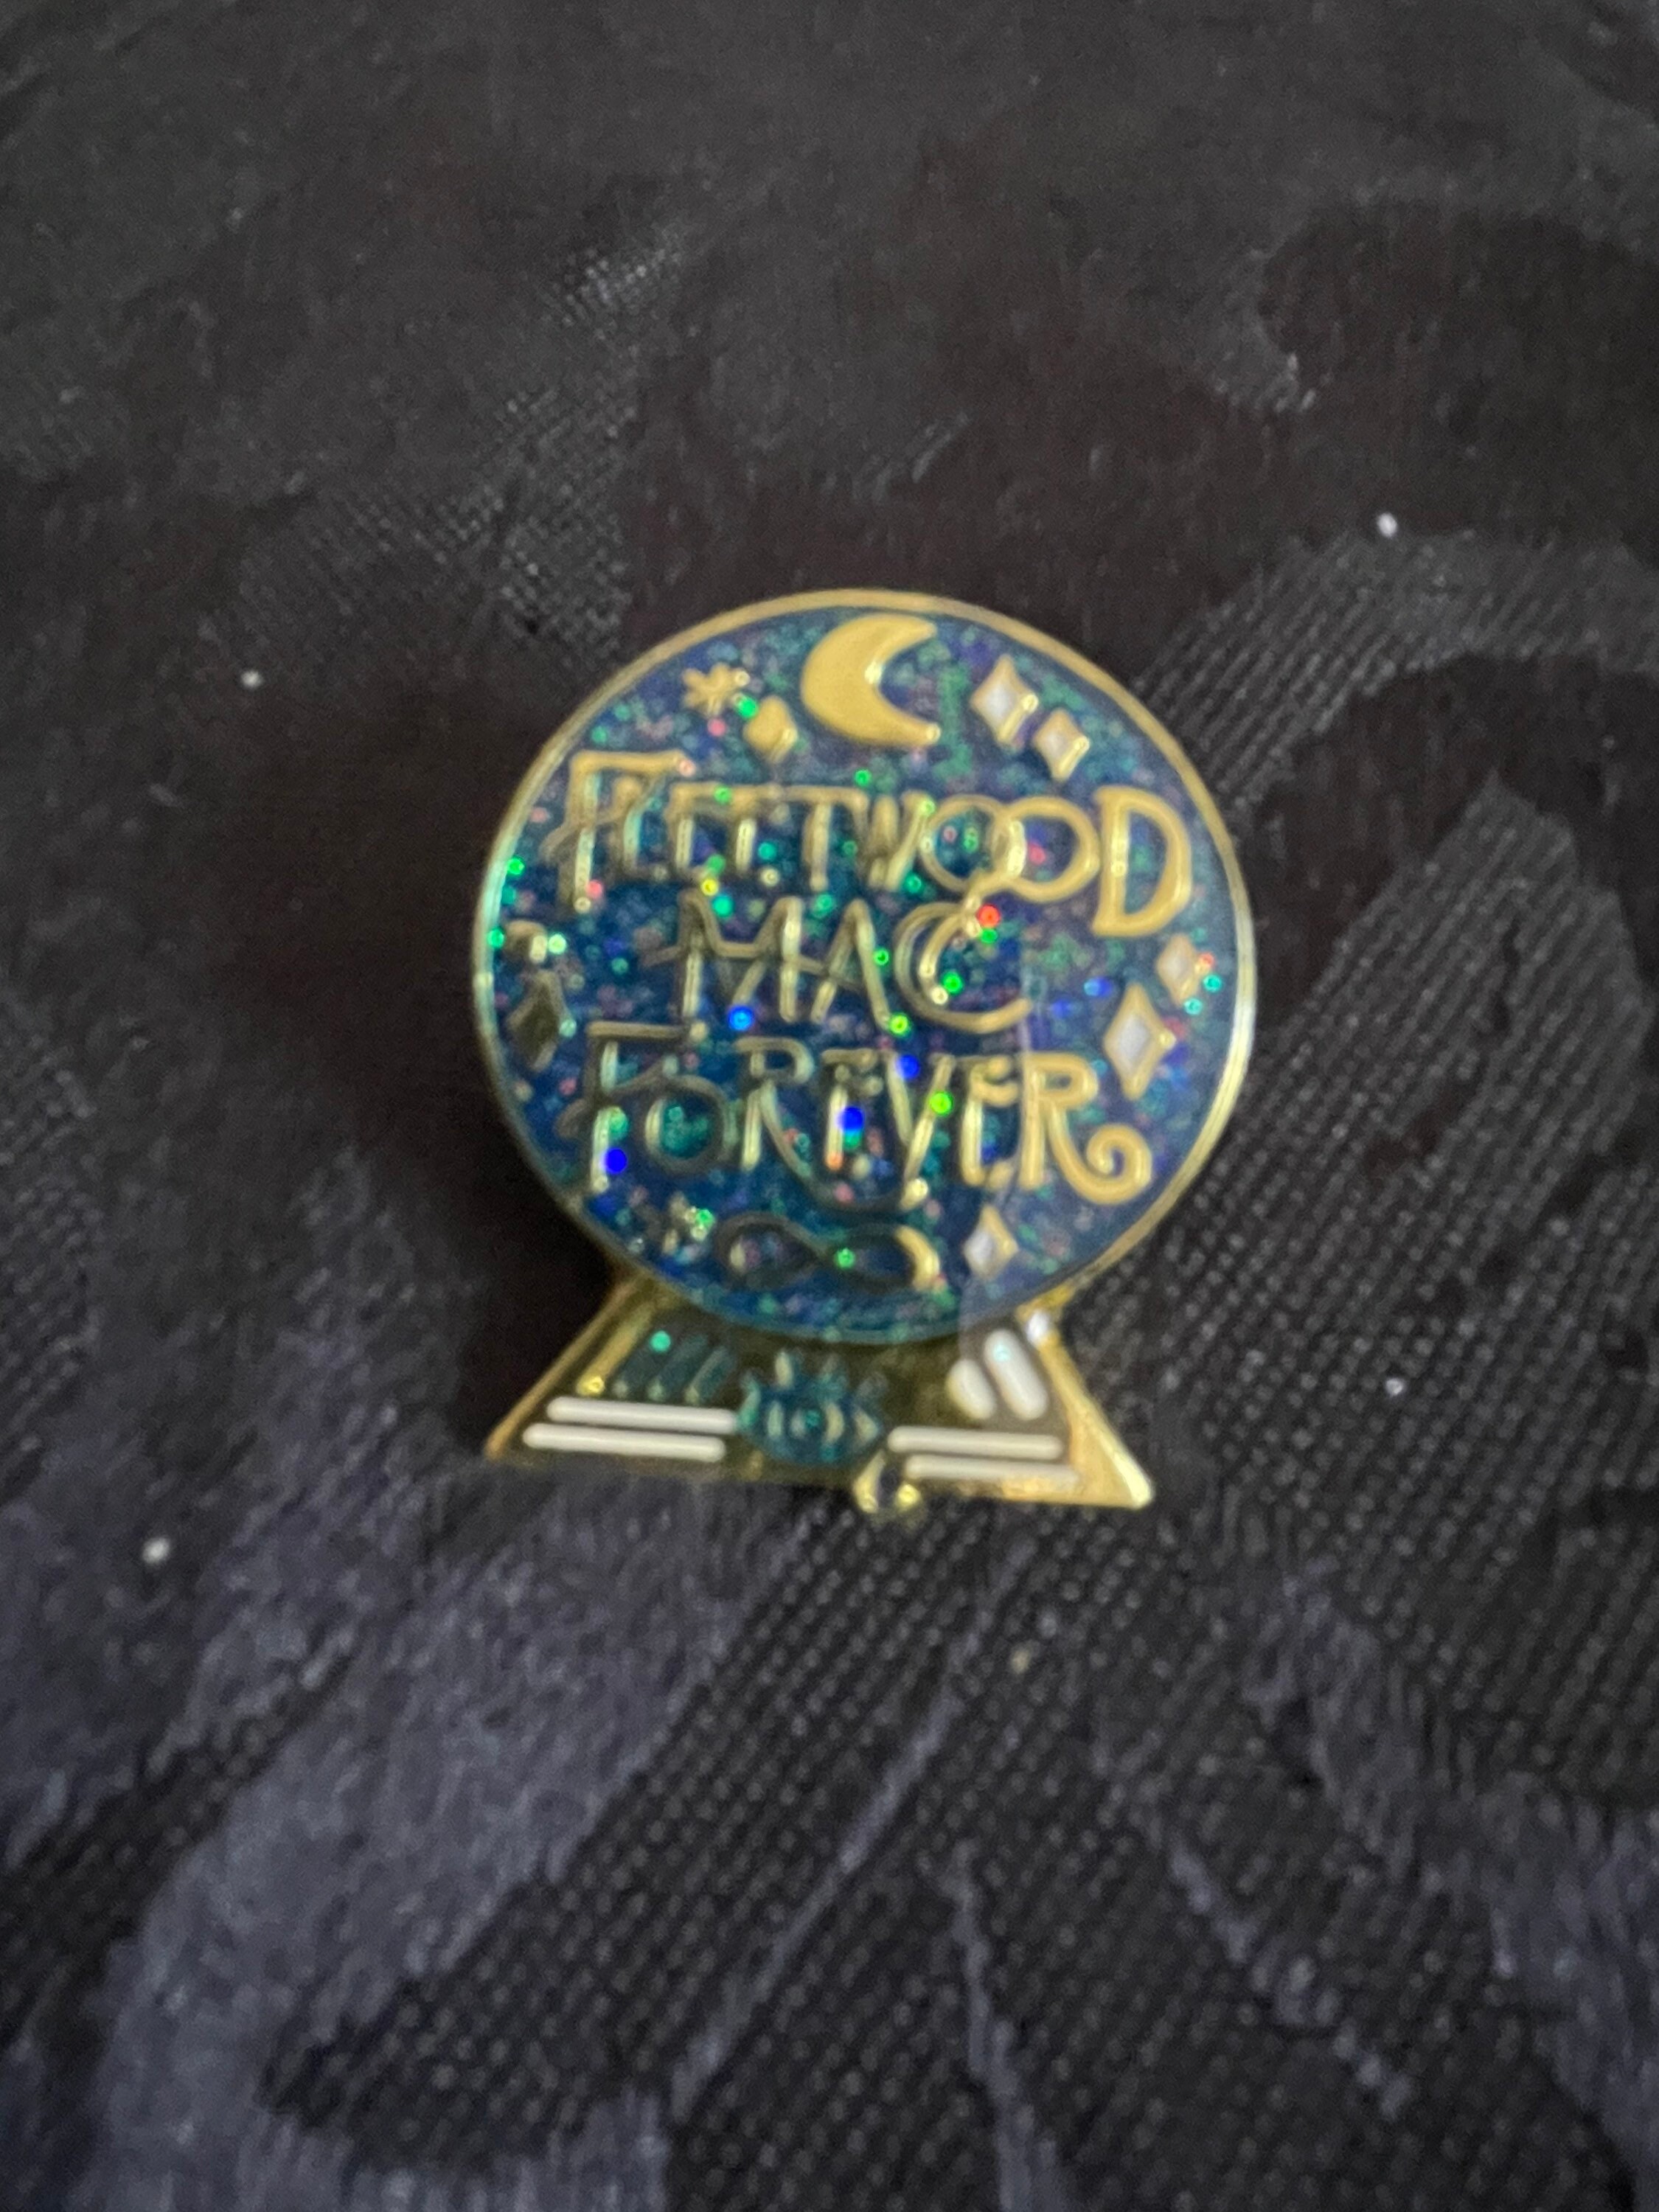 GERARD WAY Badge Pack Pin Badges Buttons Stocking Filler Emo Badge Metal  Lapel Pins Black Parade Revenge 